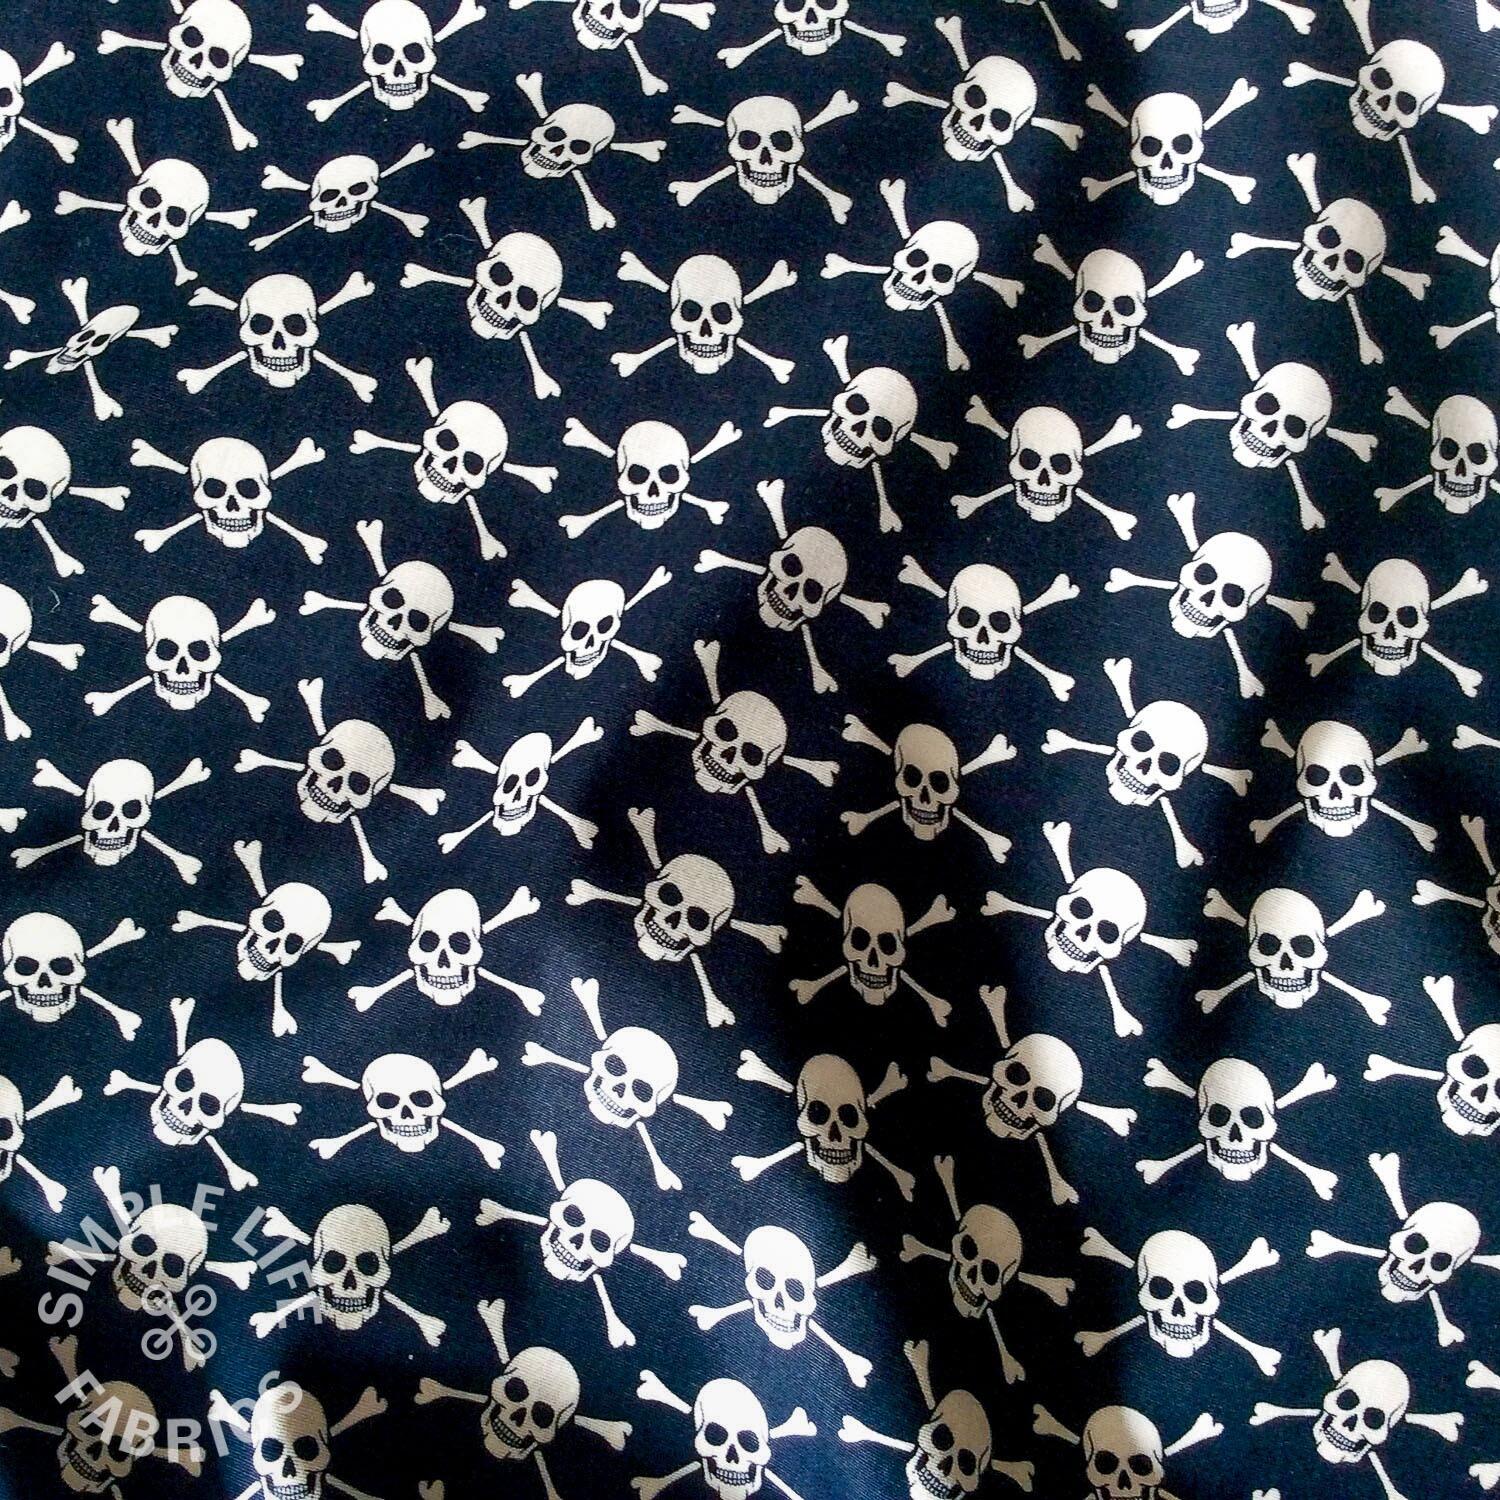 Ditsy skulls and crossbones cotton fabric